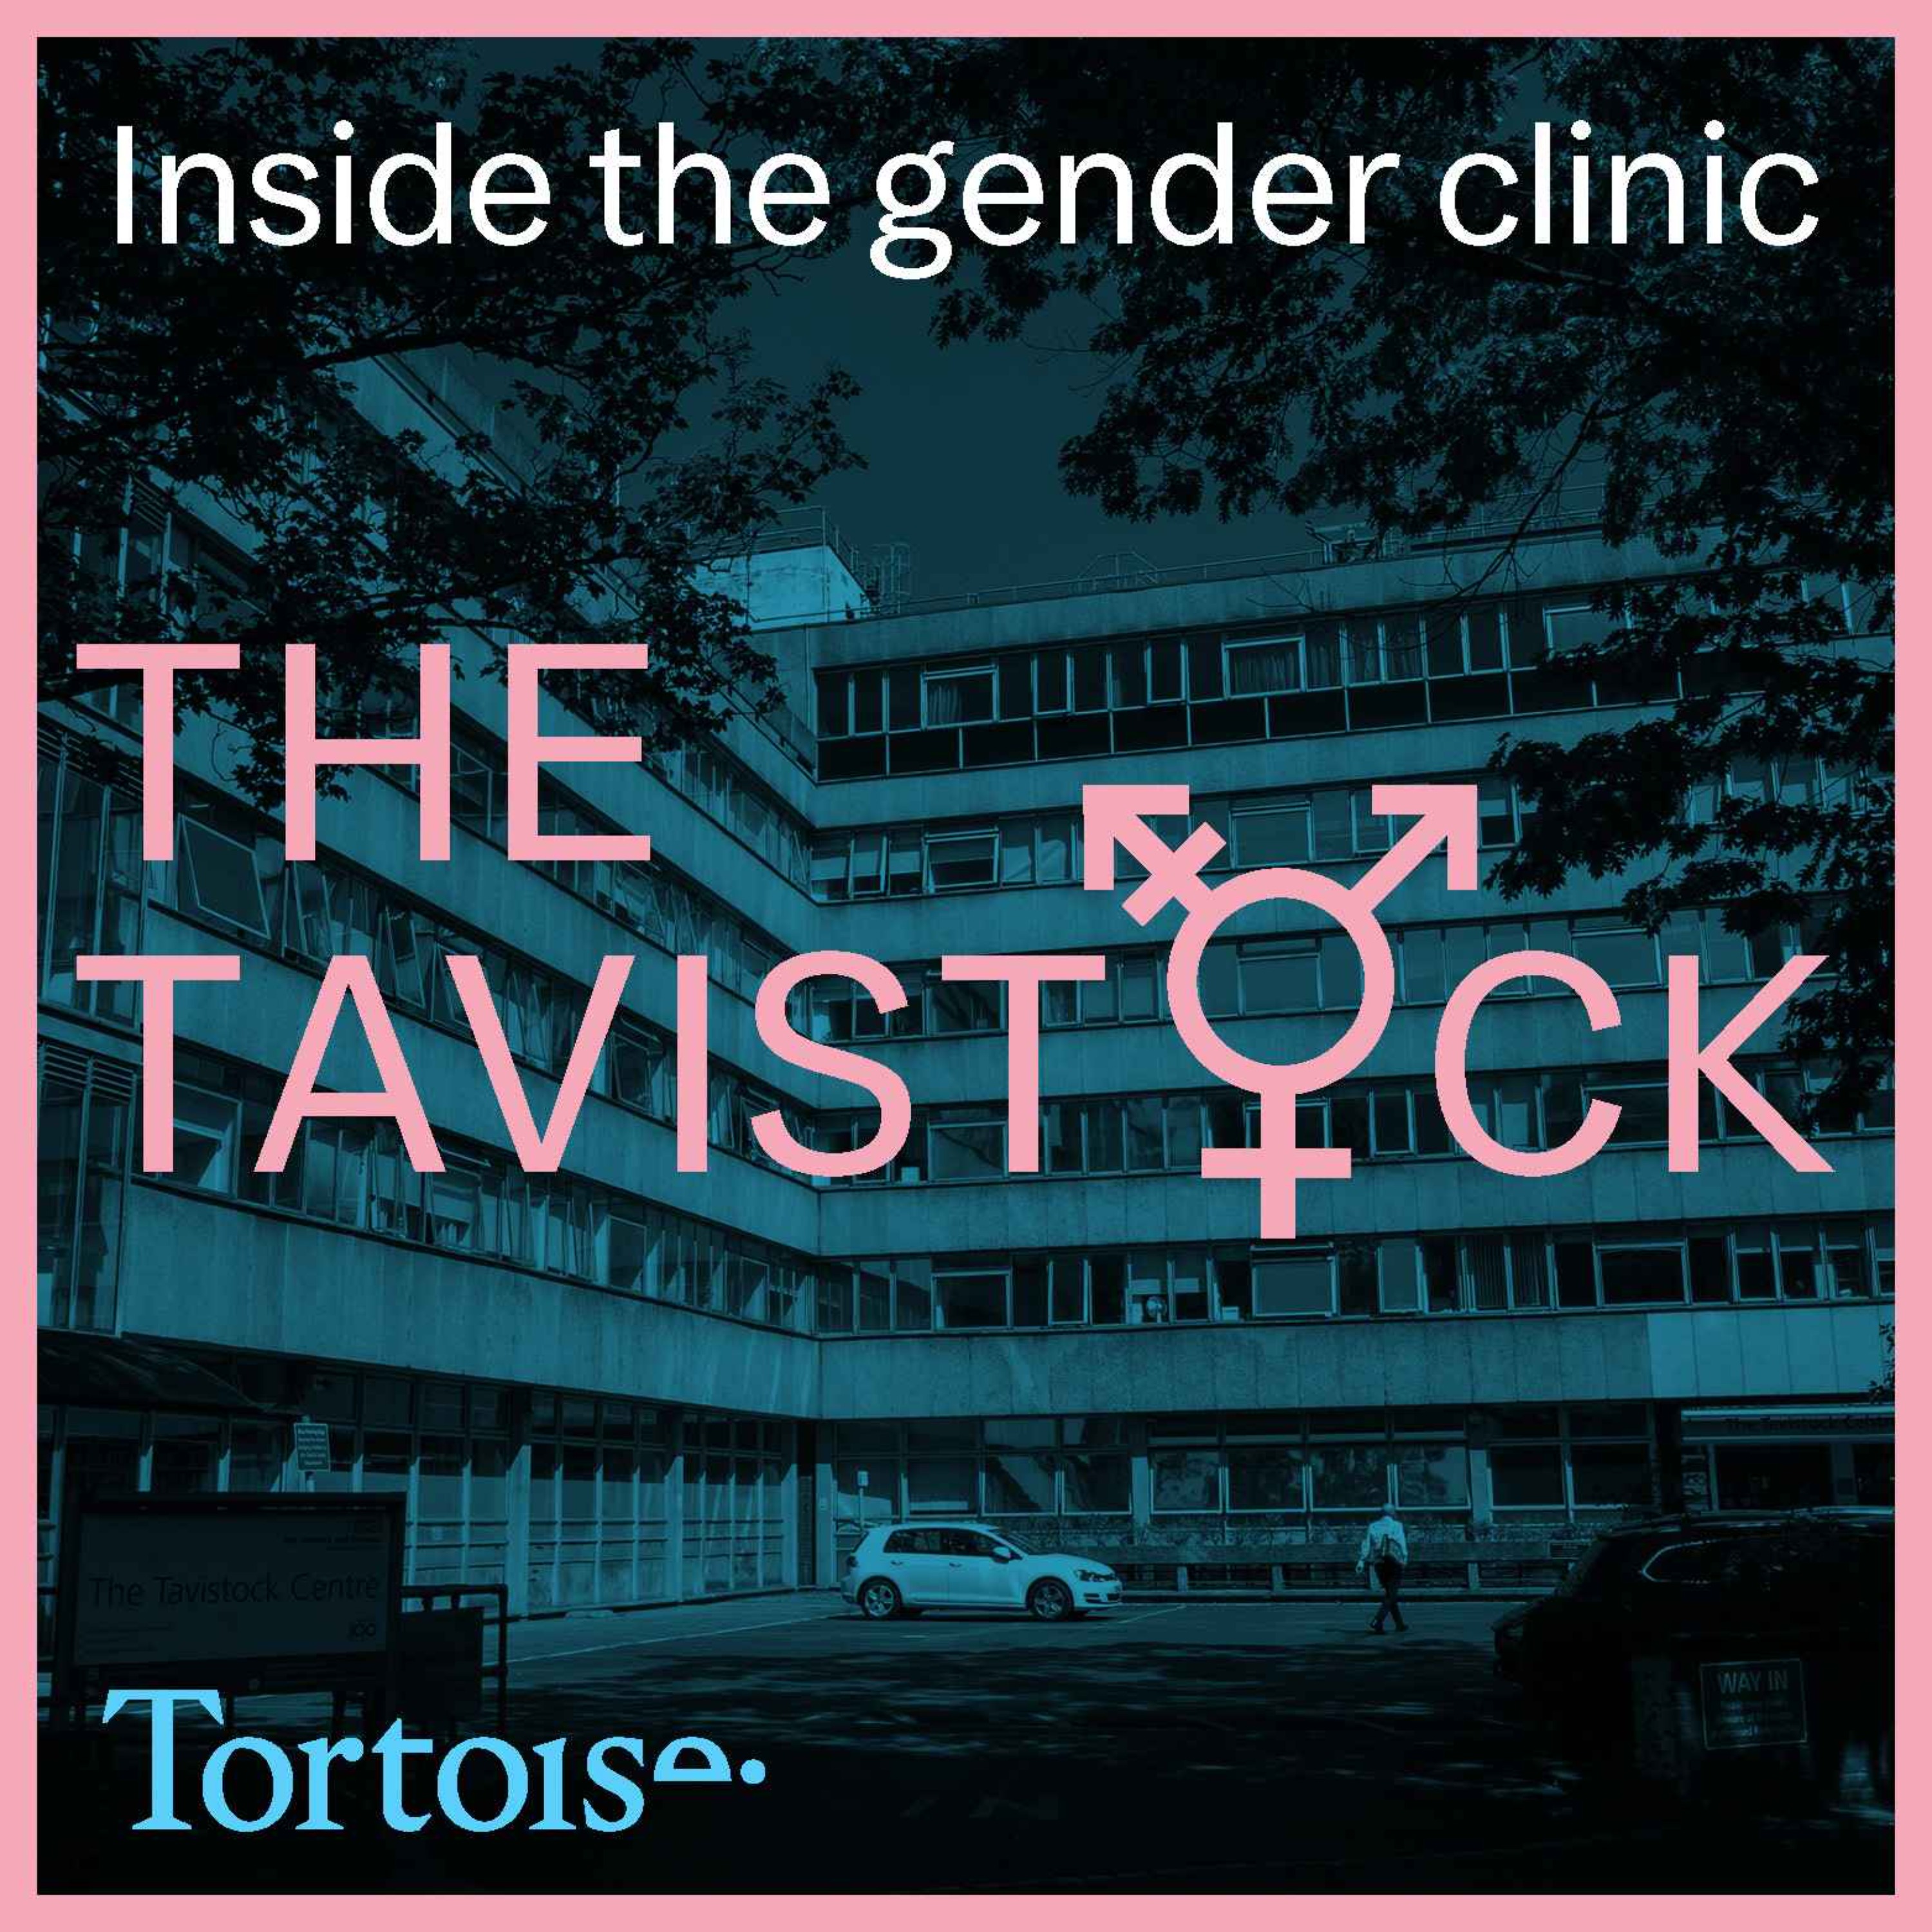 The Tavistock: inside the gender clinic podcast show image